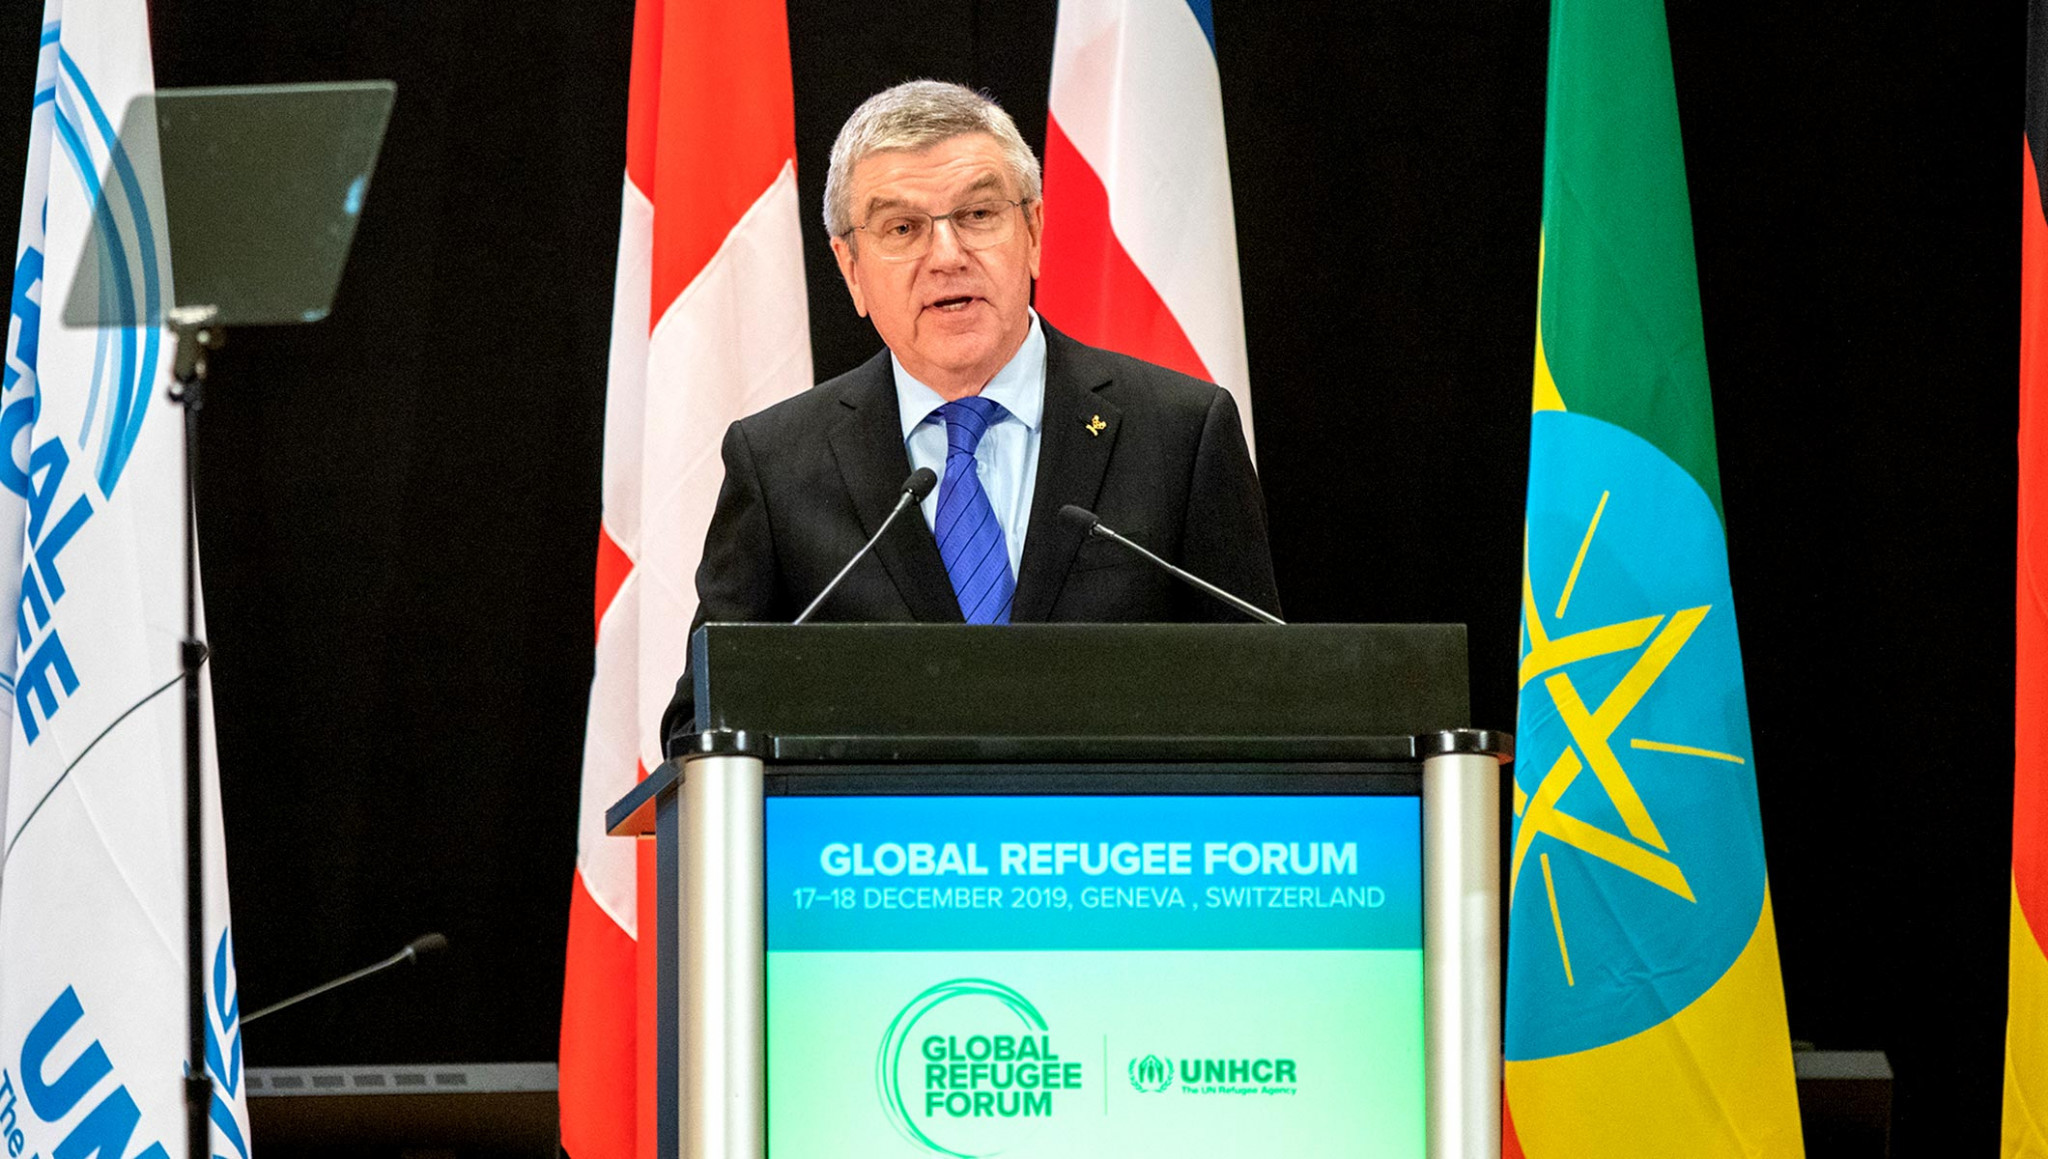 IOC President Bach attends Global Refugee Forum